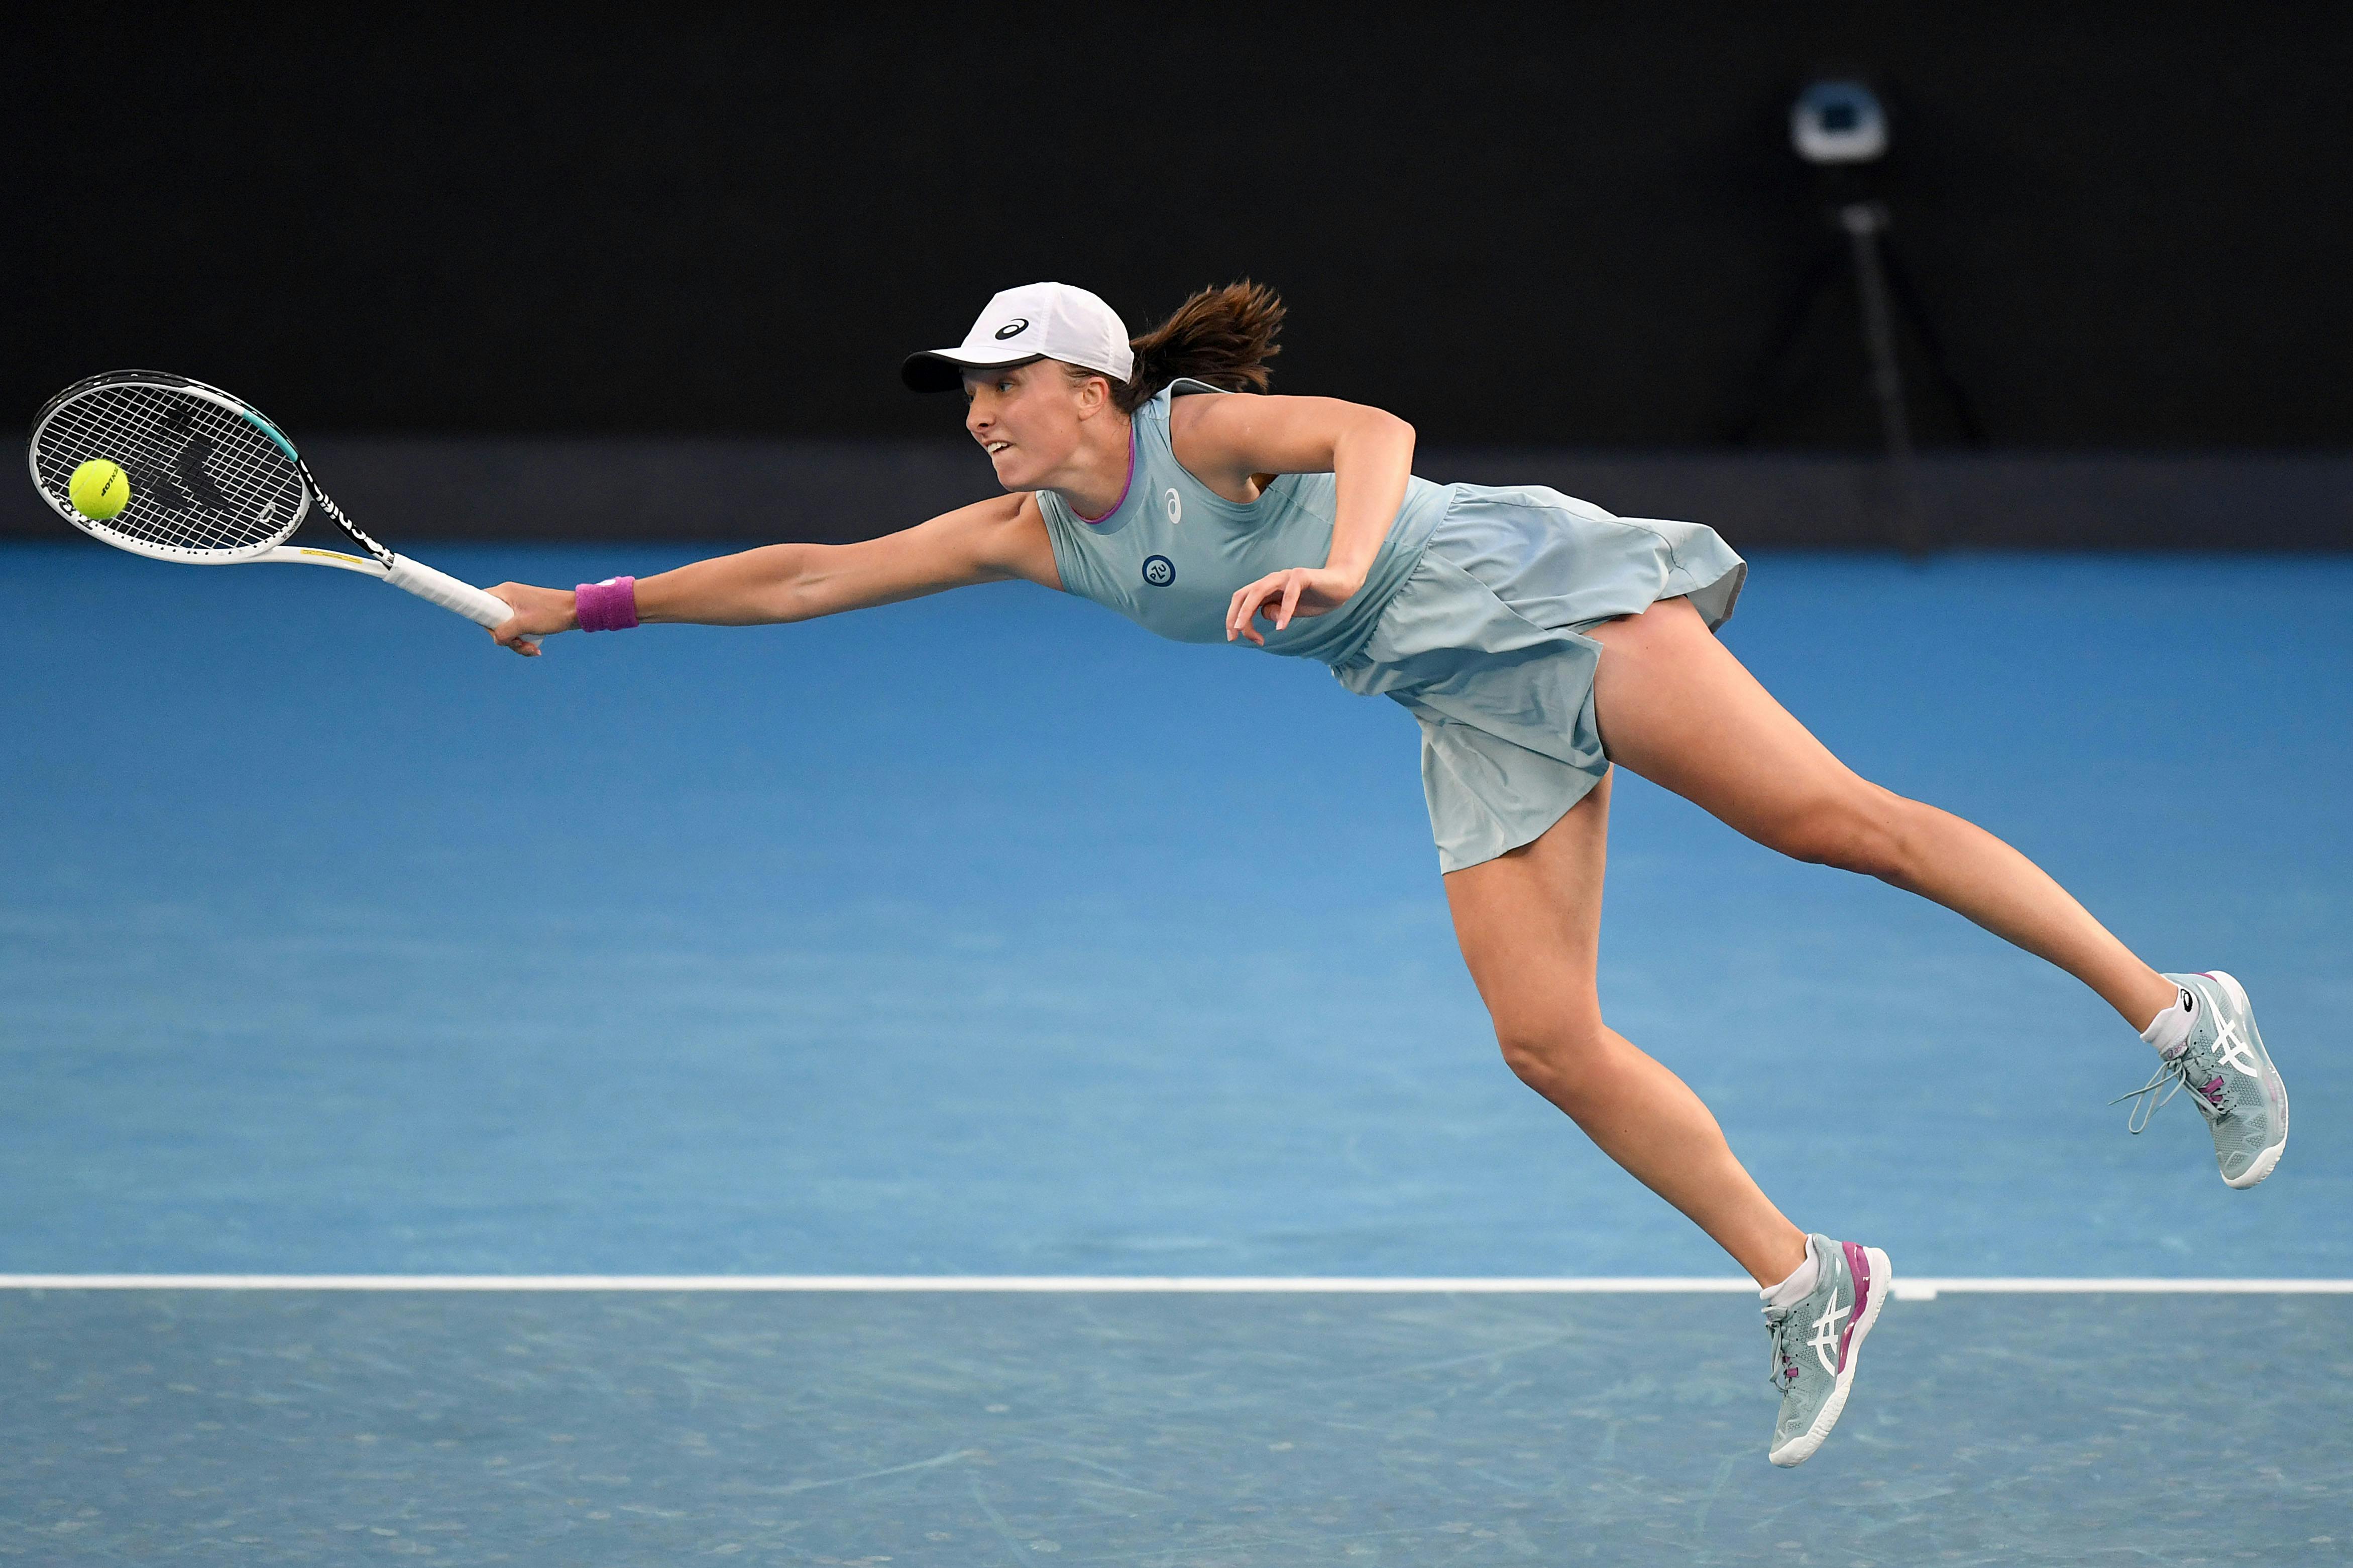 Iga Swiatek during her match against Simona Halep at the 2021 Australian Open